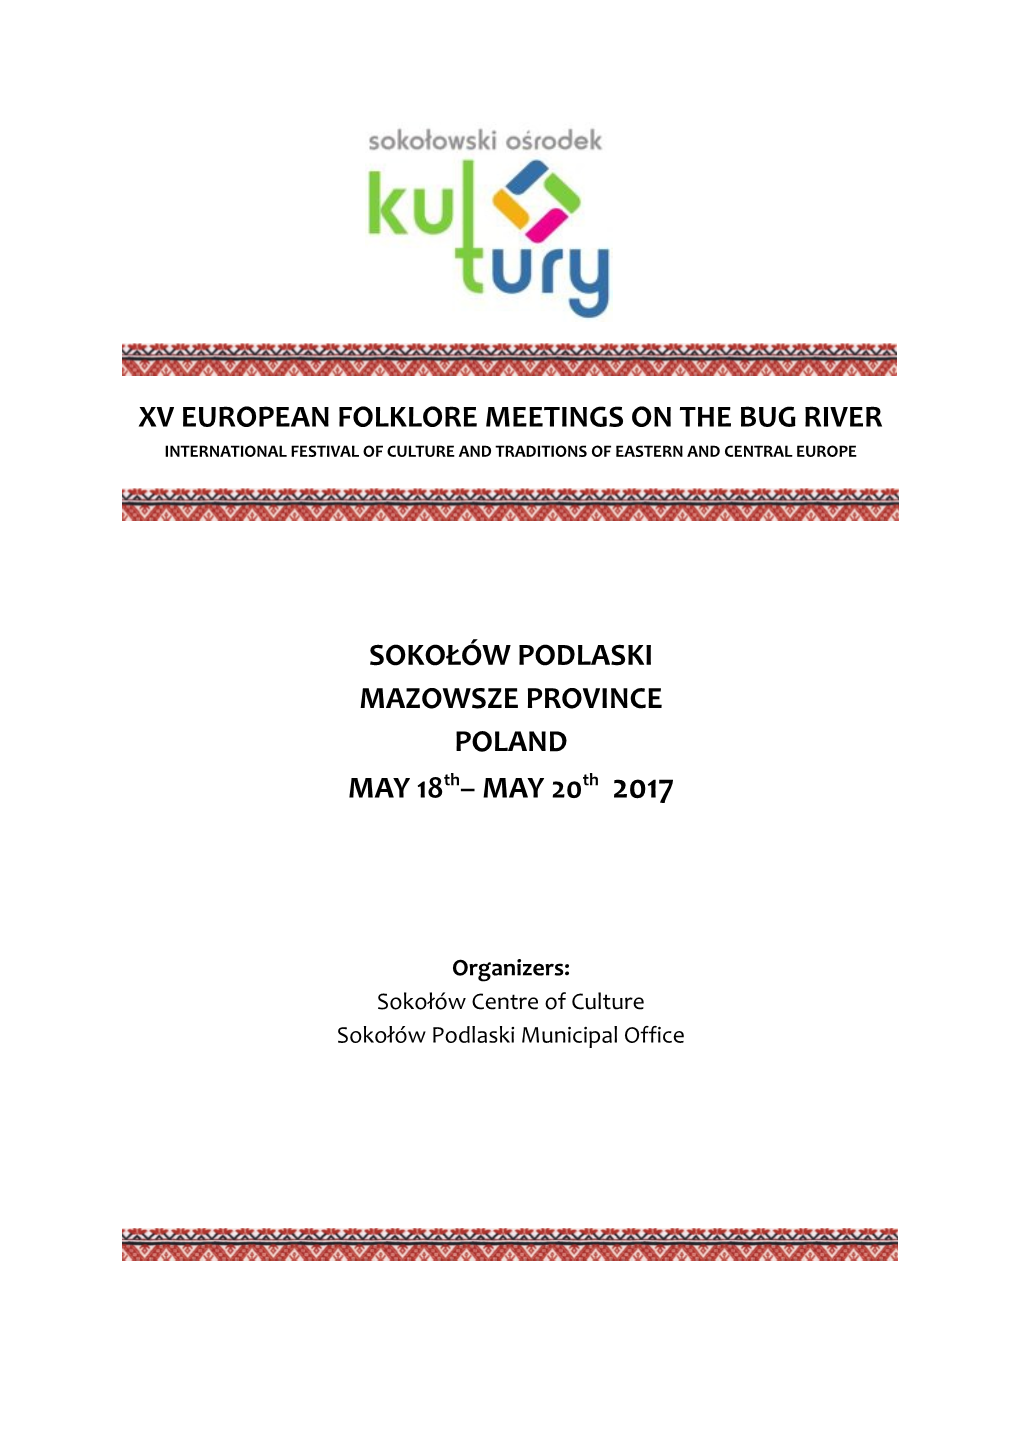 Xv European Folklore Meetings on the Bug River